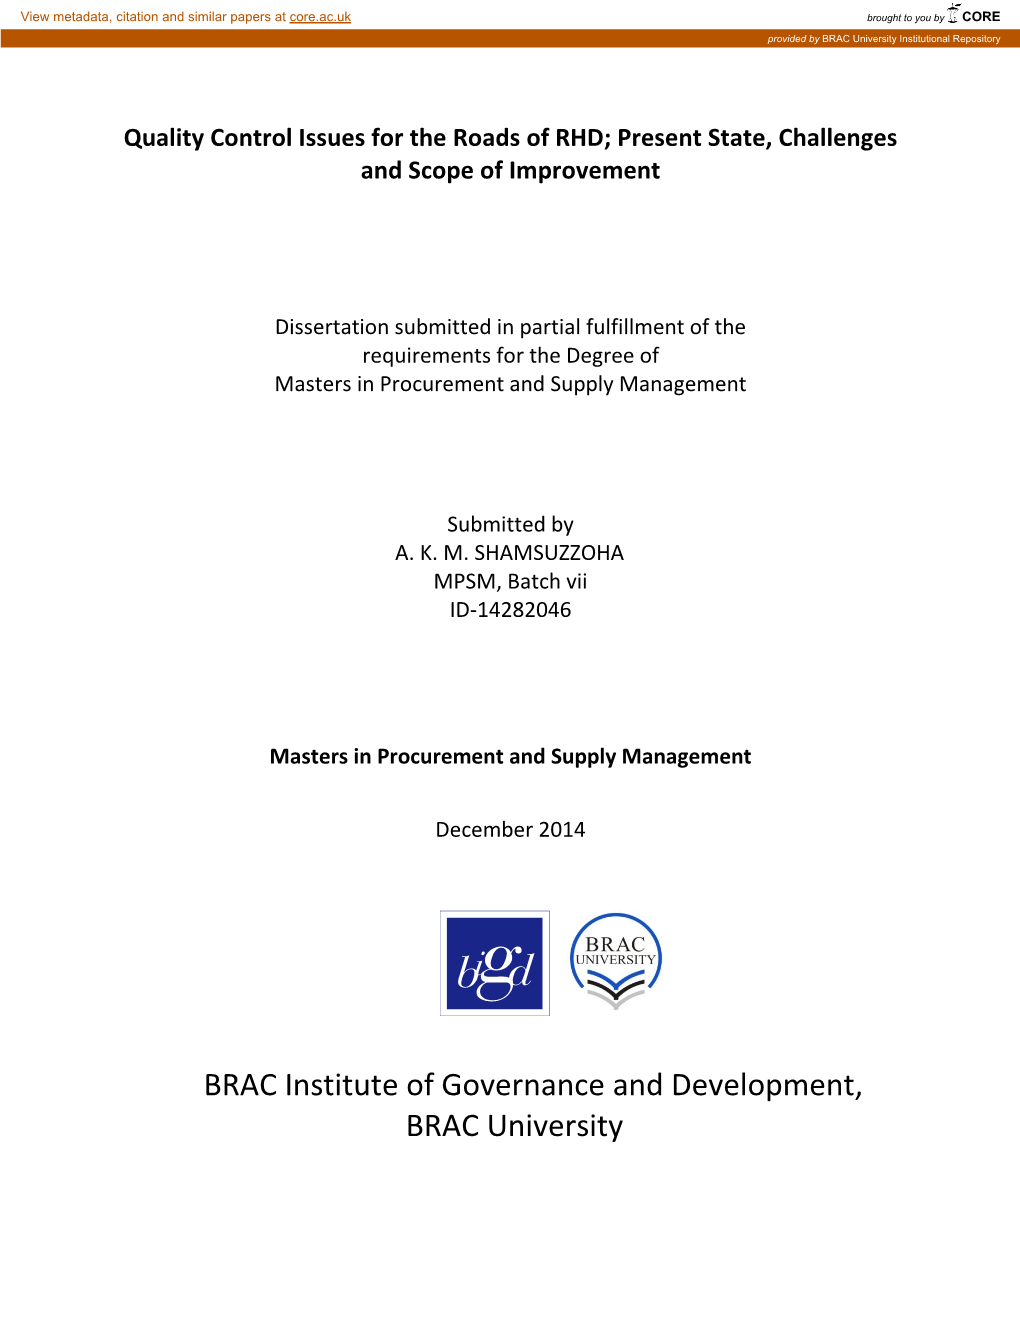 BRAC Institute of Governance and Development, BRAC University